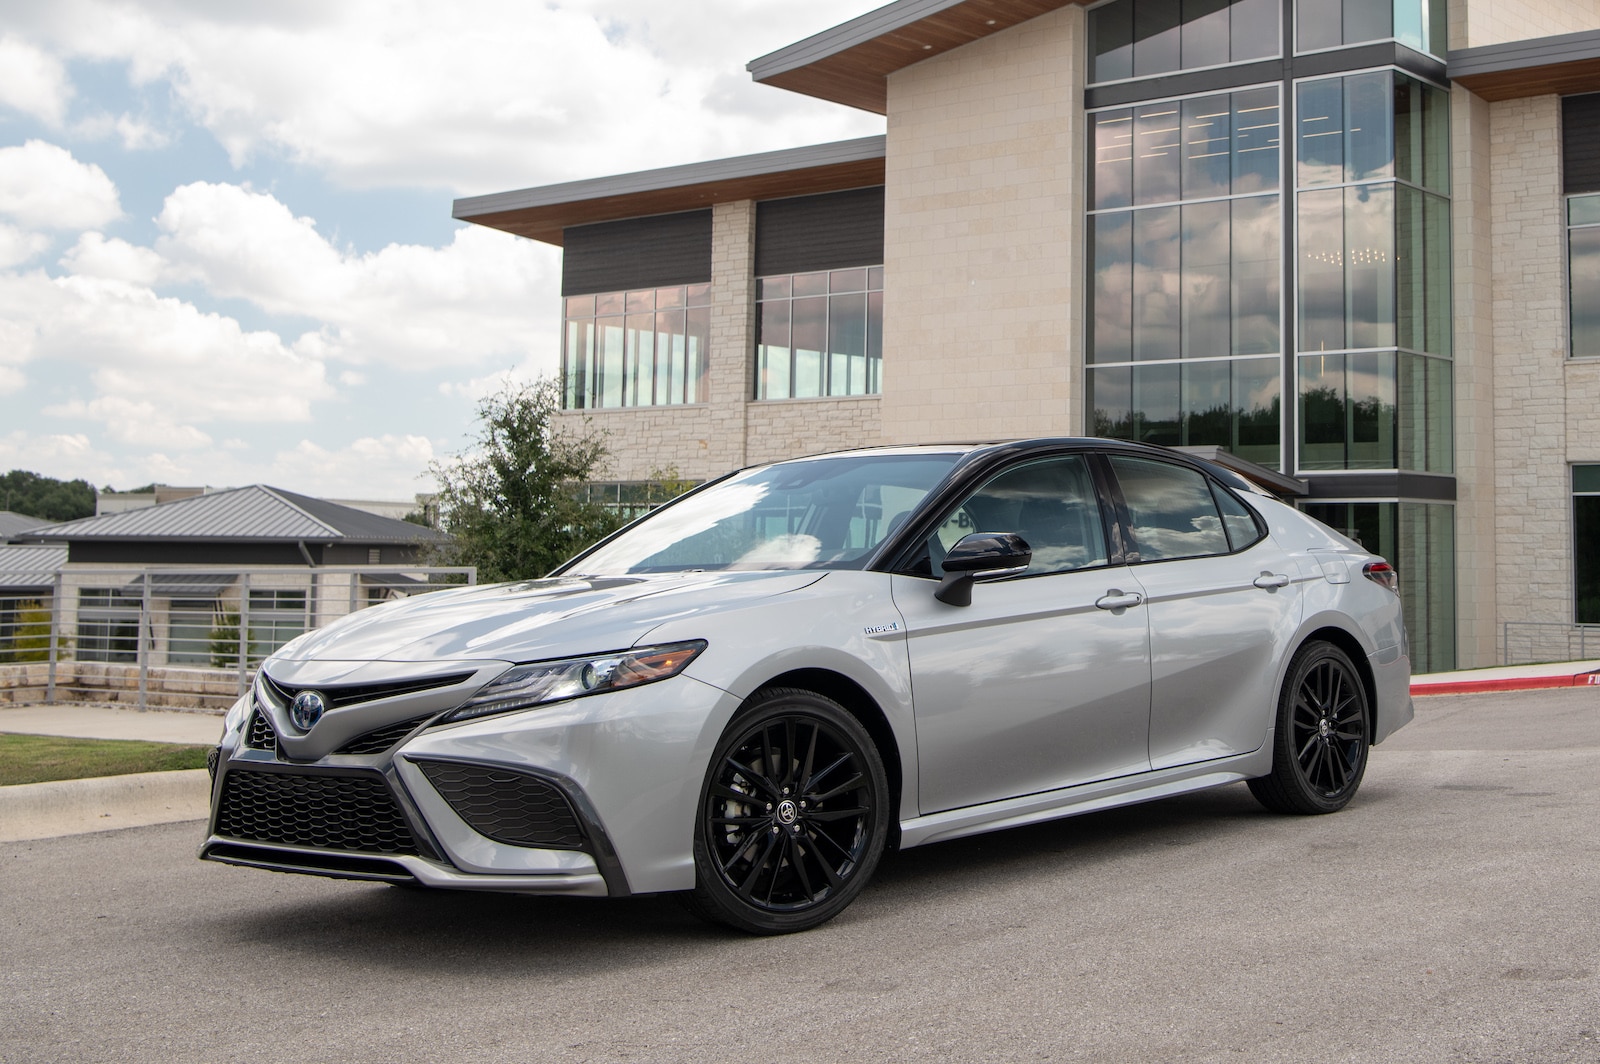 A Week With: 2021 Toyota Camry XSE Hybrid - The Detroit Bureau